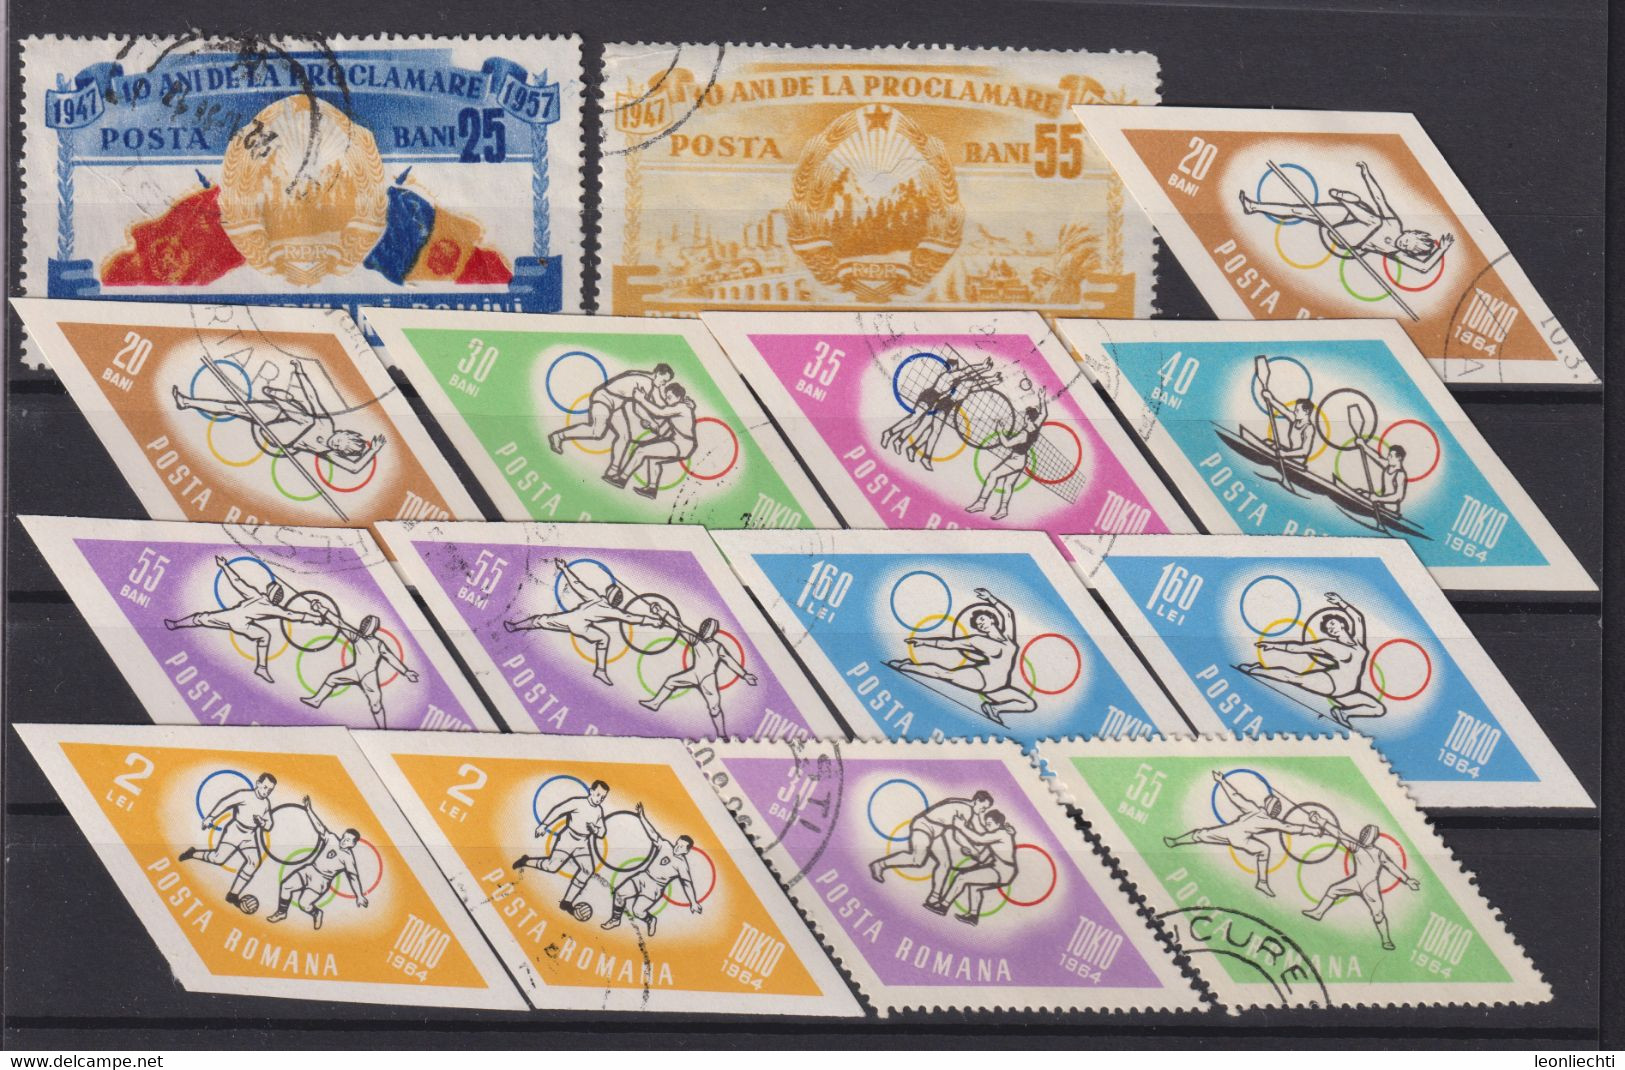 Rumänien Lot °  Briefmarken Gestempelt /  Stamps Stamped /  Timbres Oblitérés - Lotes & Colecciones